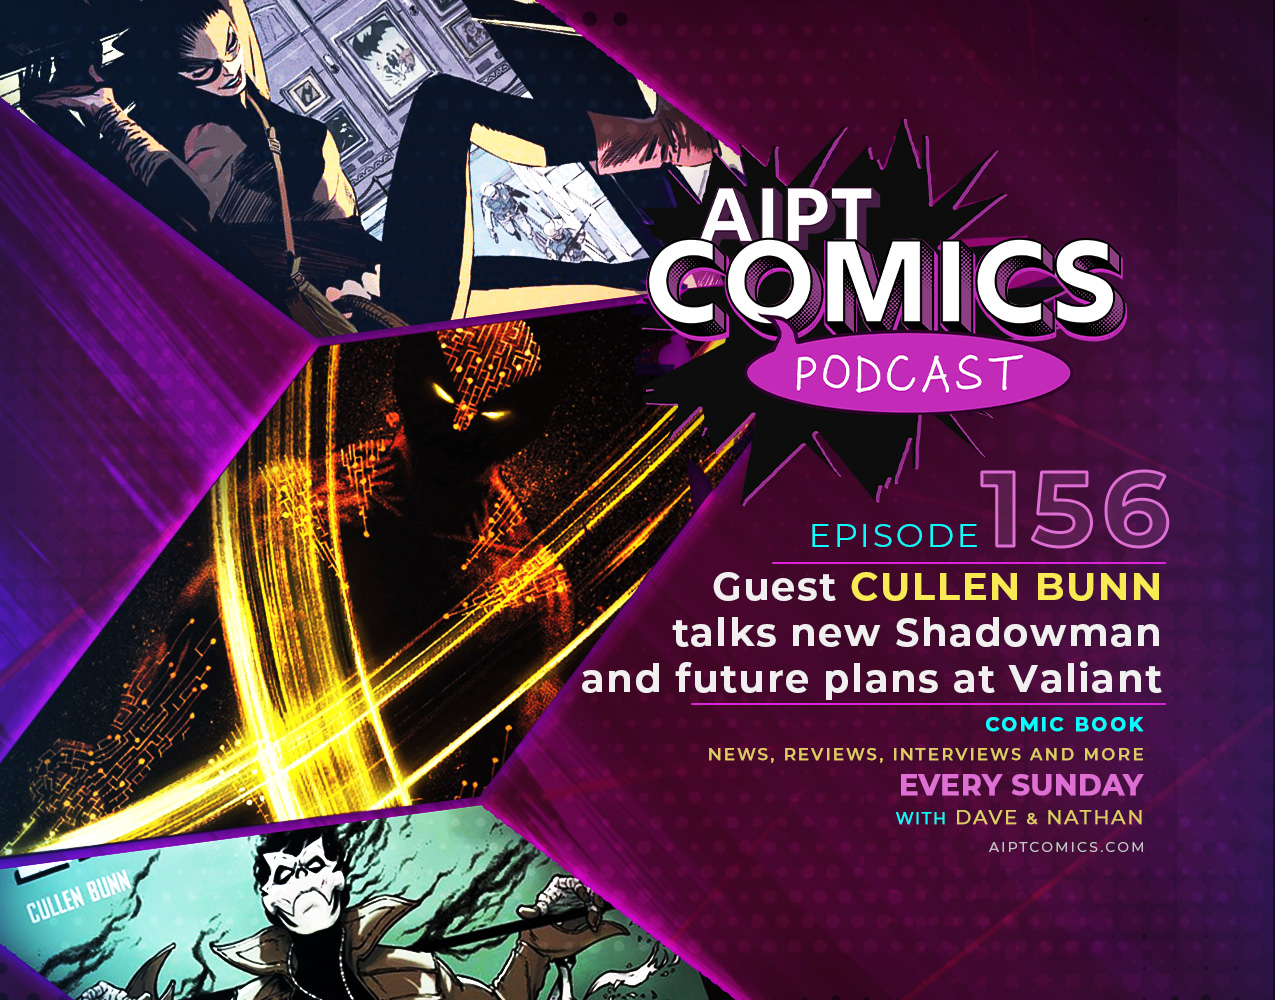 AIPT Comics podcast episode 156: Guest Cullen Bunn talks new 'Shadowman' and future plans at Valiant